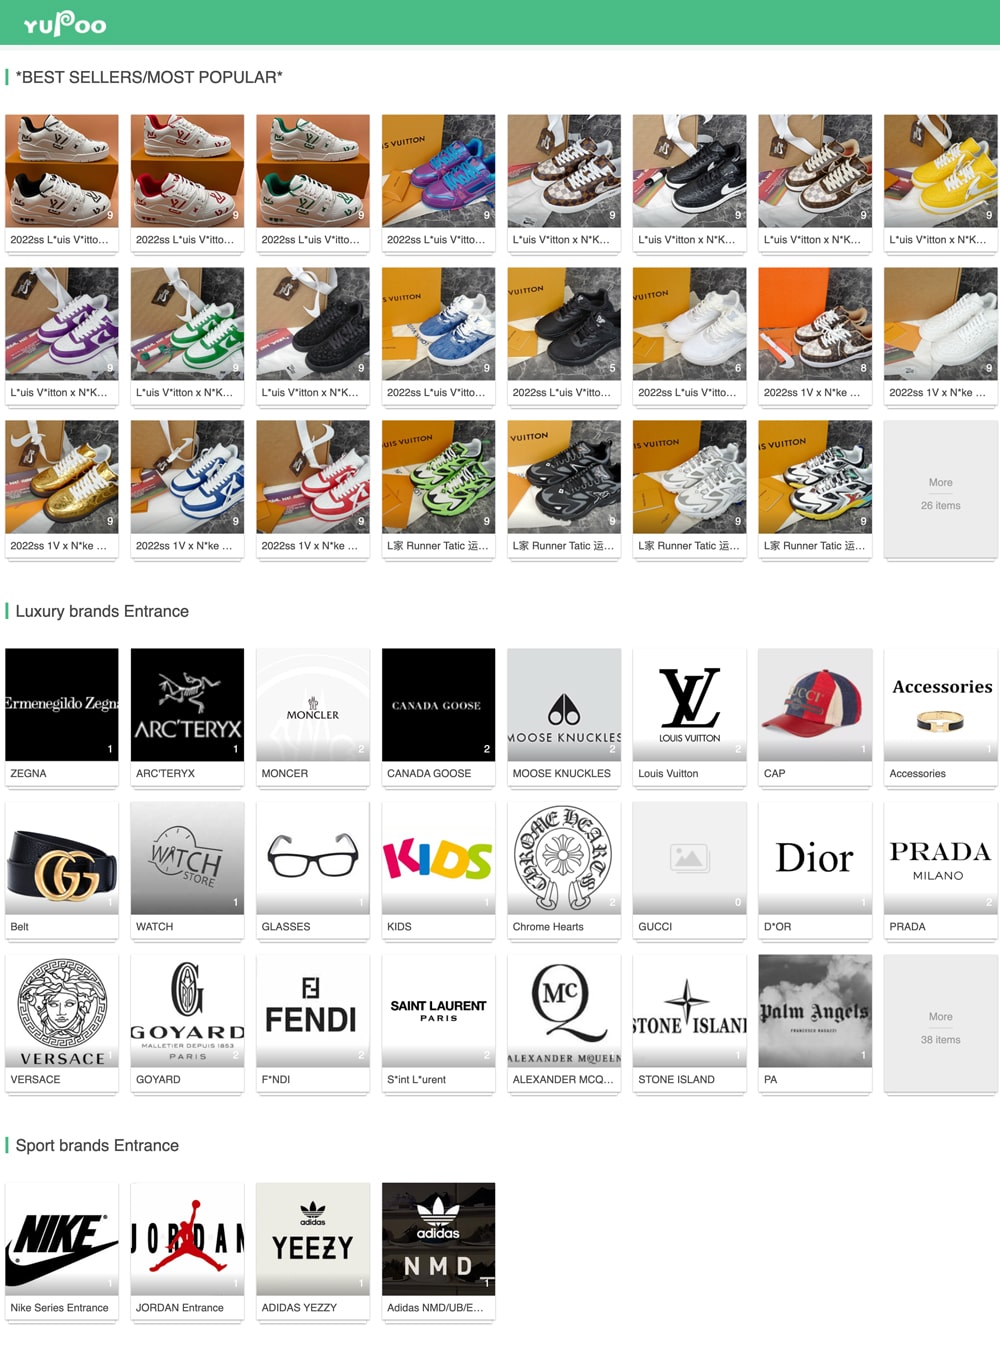 Louis Vuitton shoes brand yupoo album